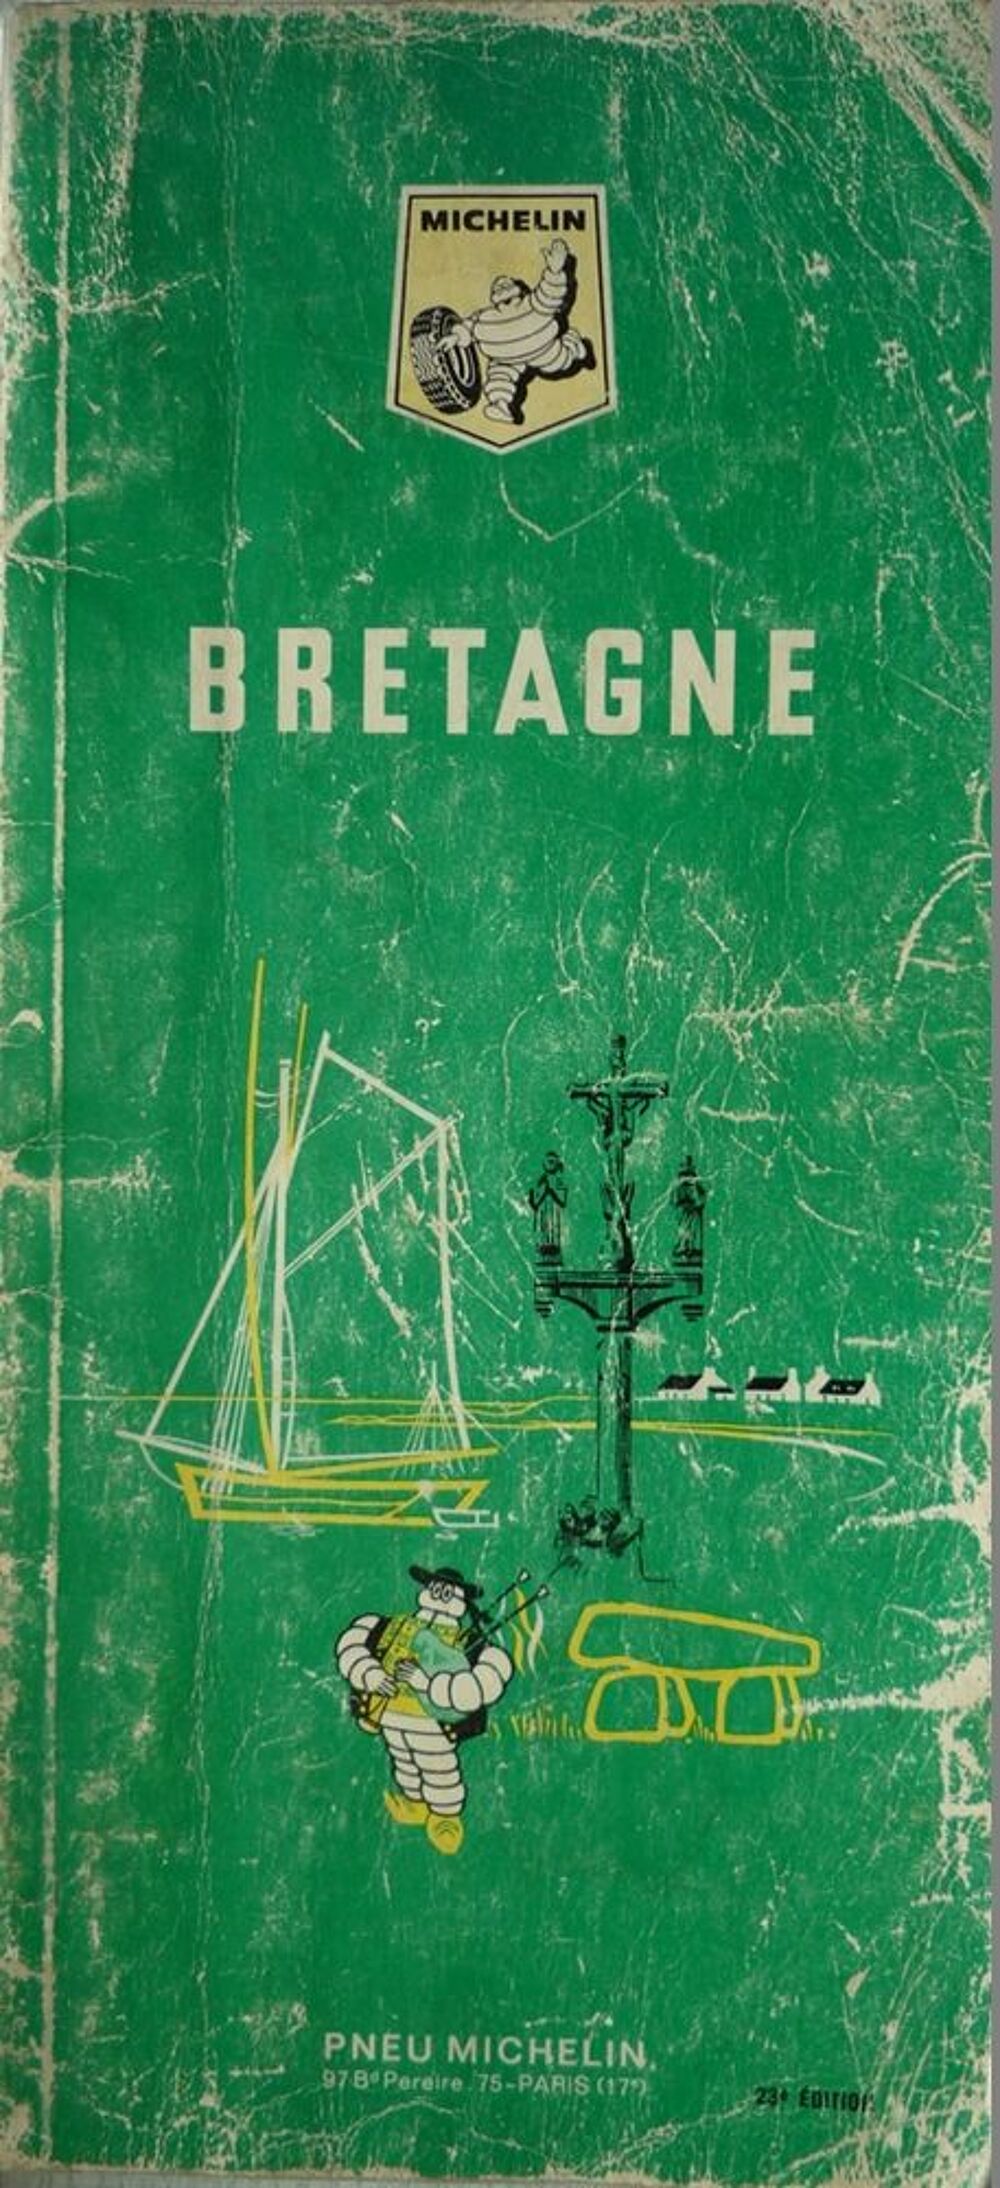 Guide vert MICHELIN - BRETAGNE Livres et BD